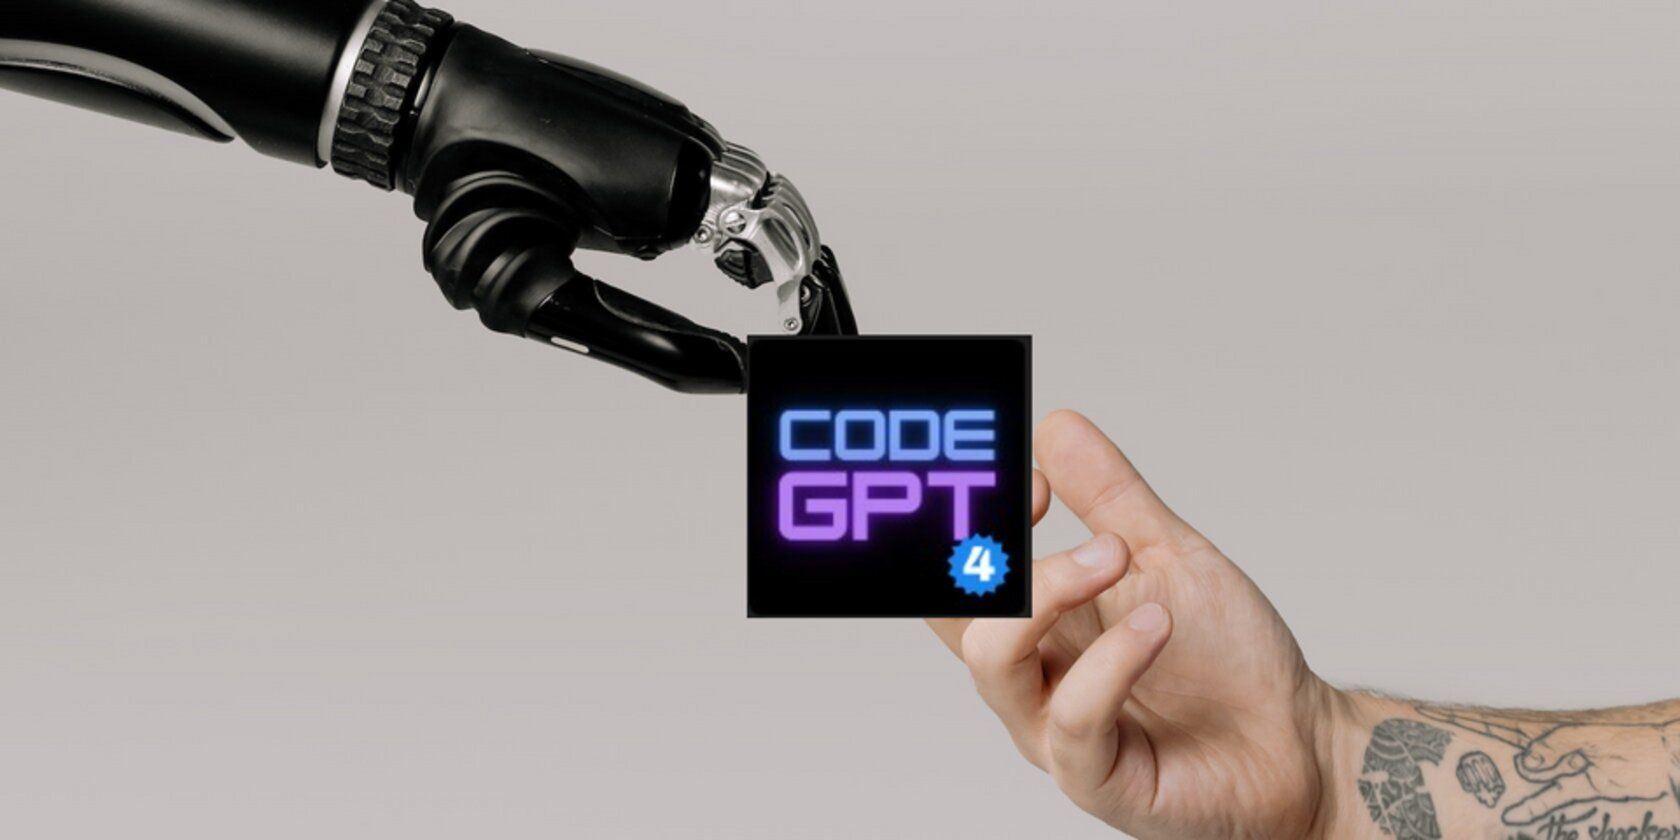 Human hand and robot hand with CodeGPT logo overlayed